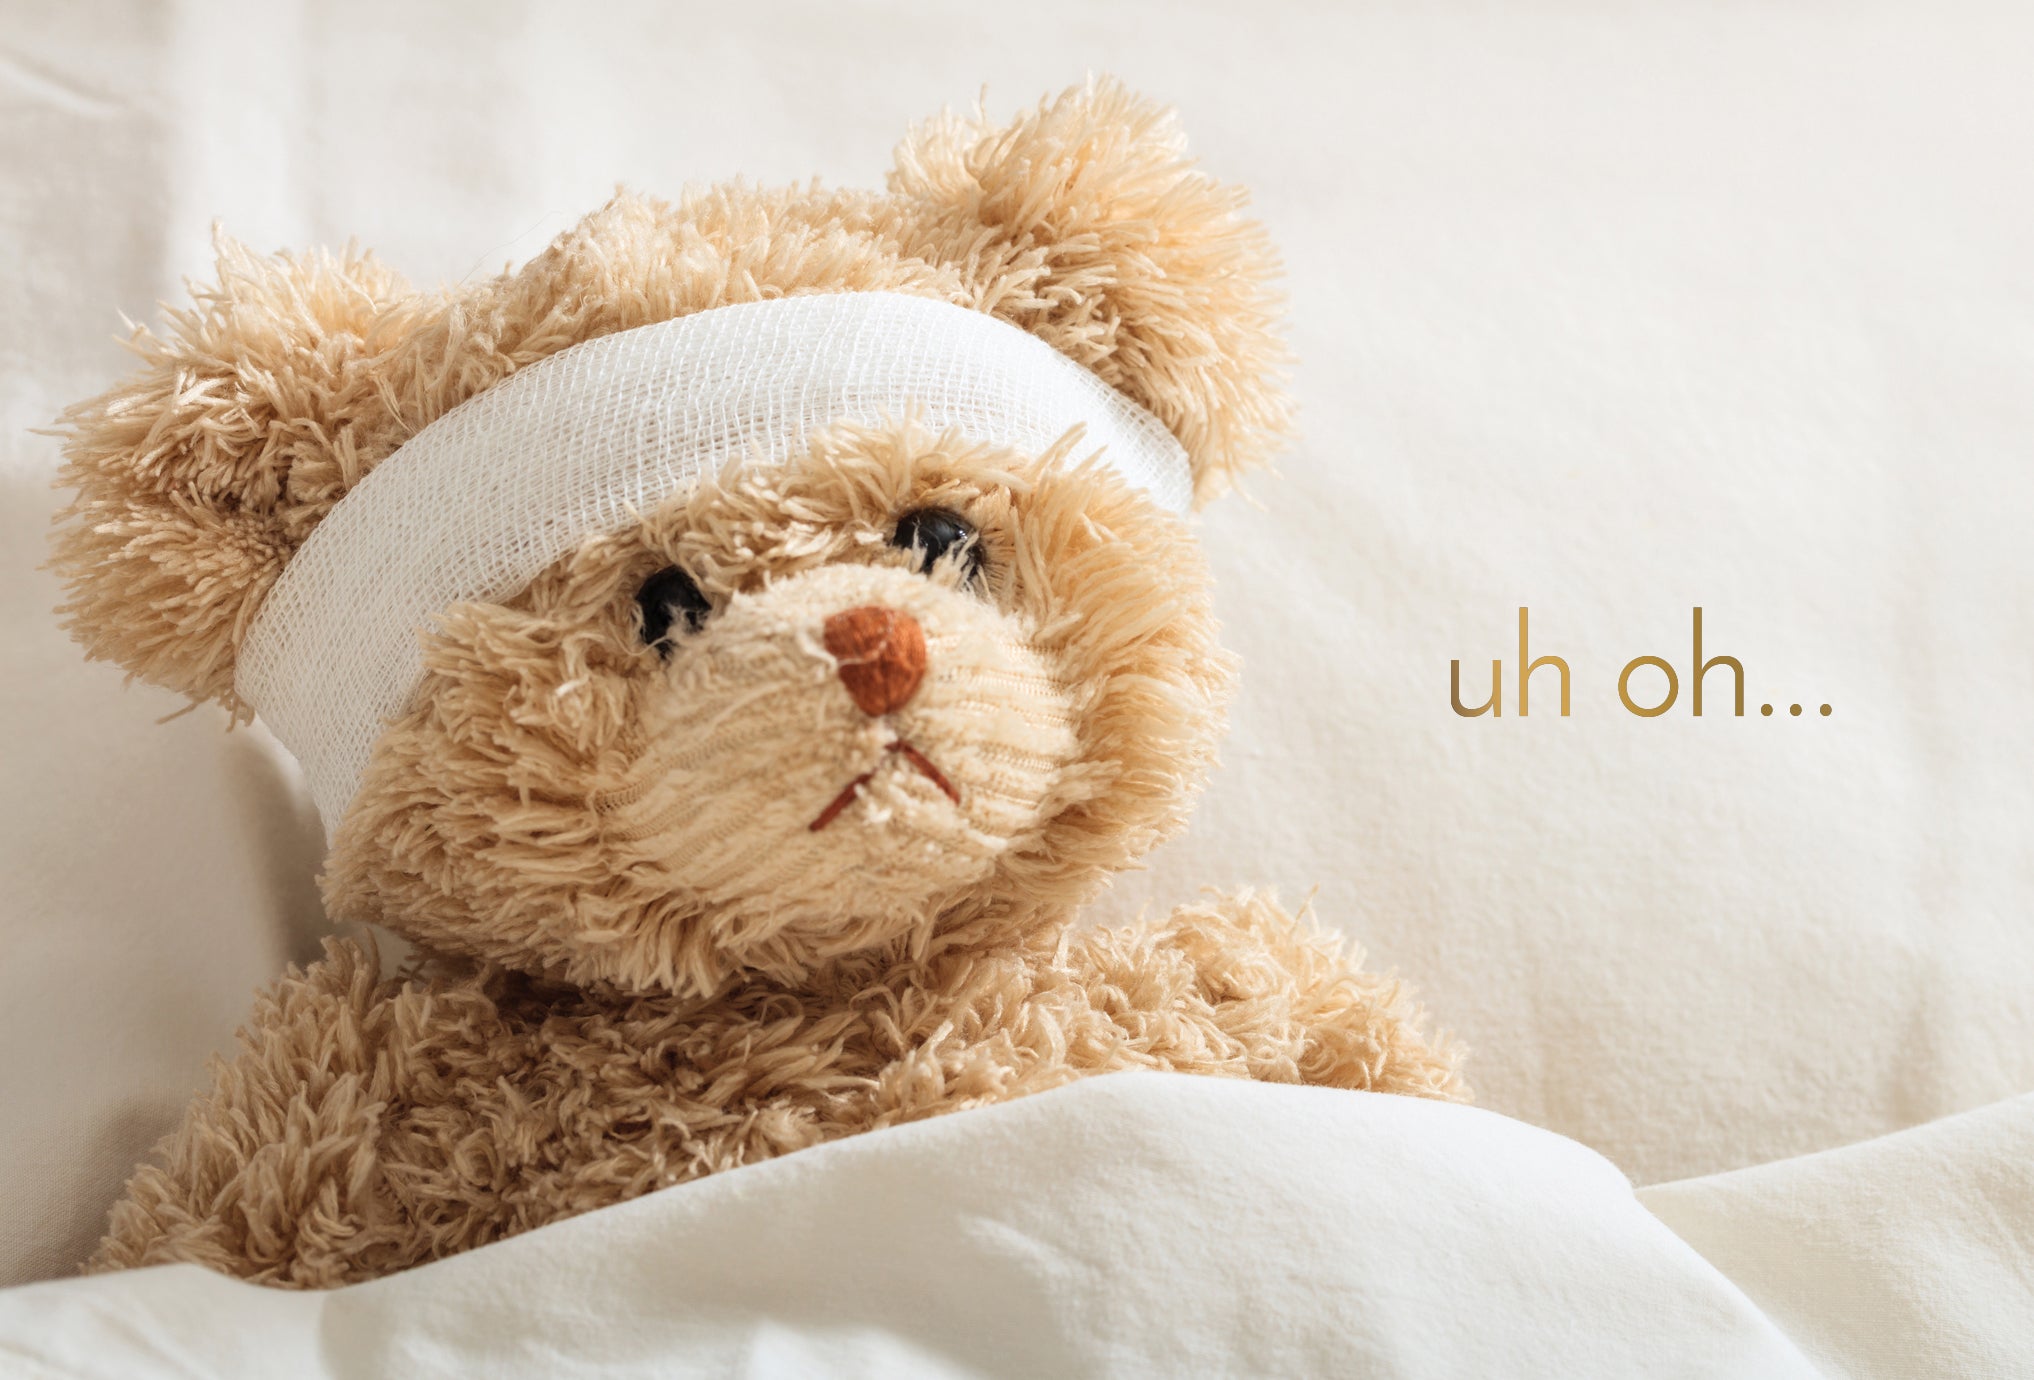 Get Well Soon Card Teddy Bear With Bandaged Arm Stock Illustration